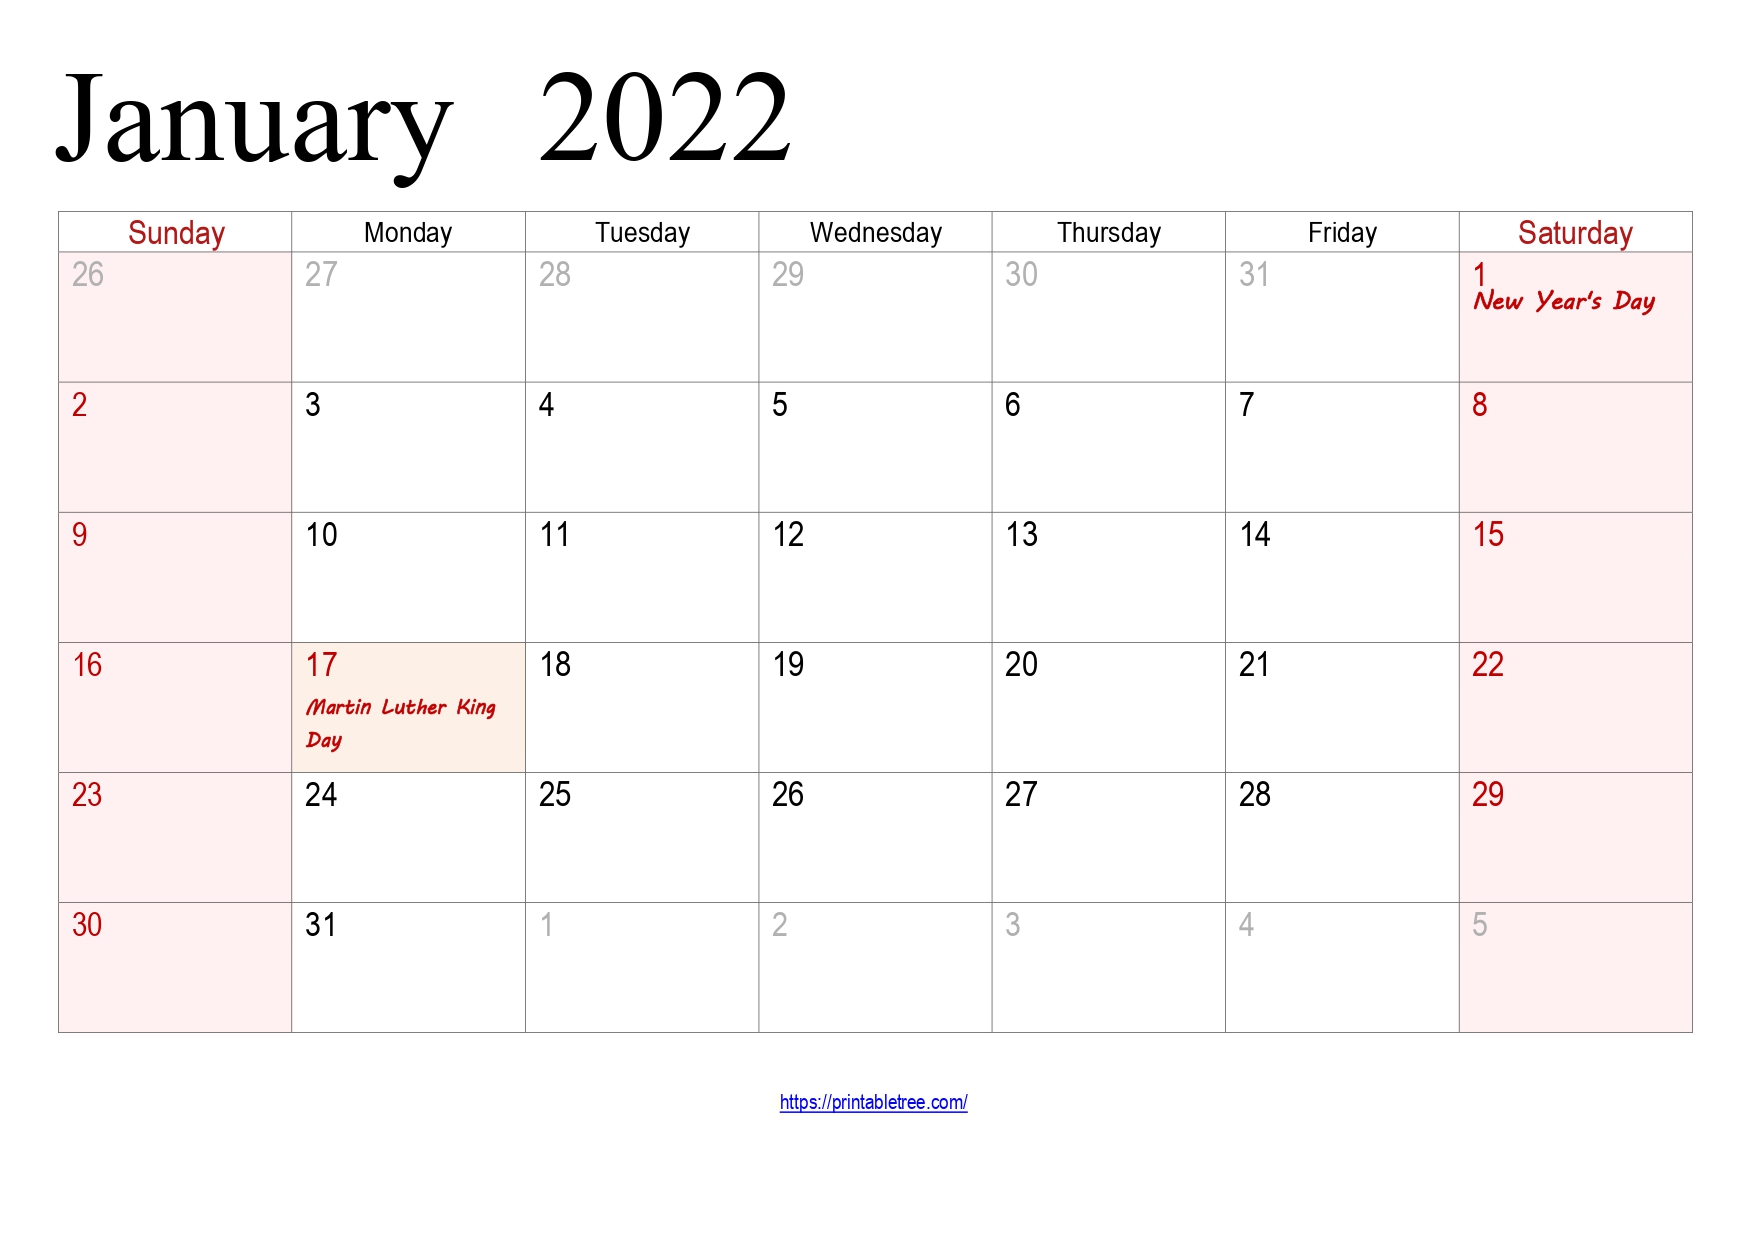 January Calendar 2022 with holidays